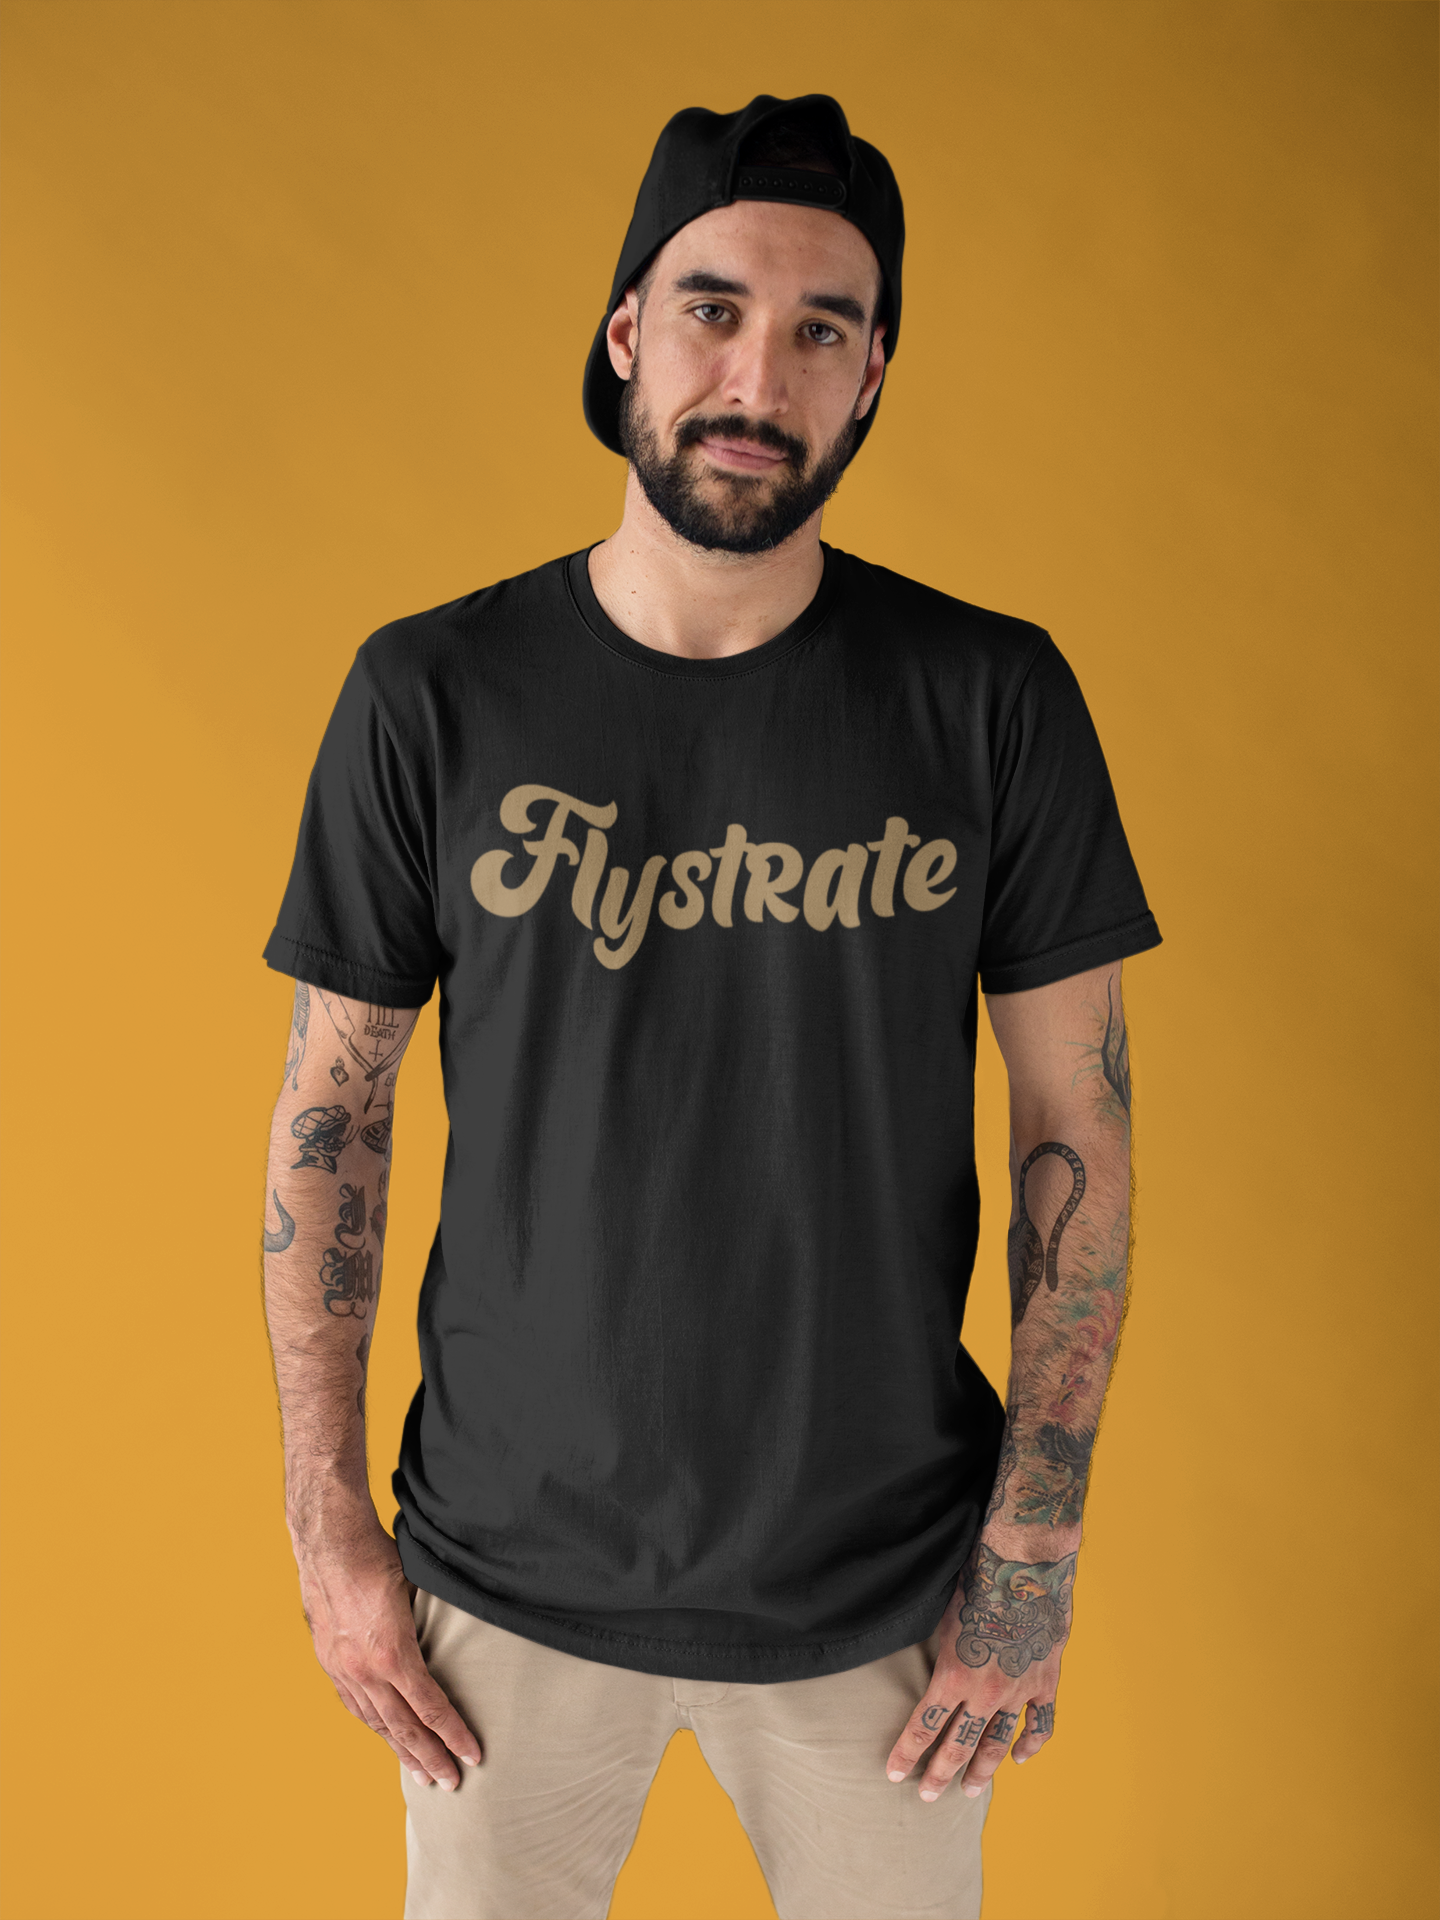 Flystrate khaki logo tee shirt